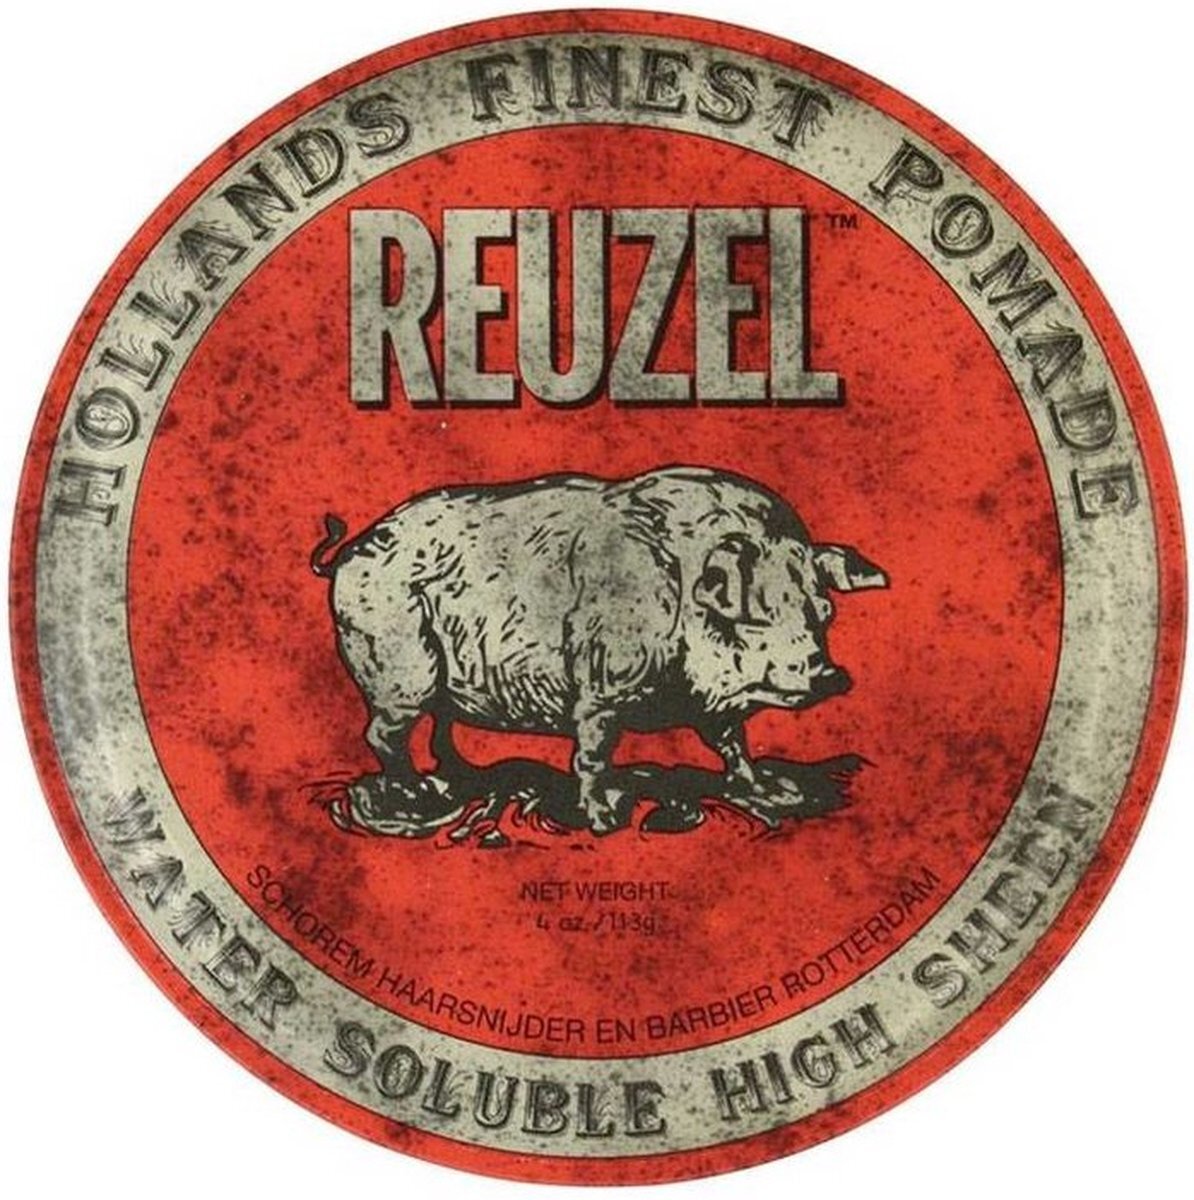 Reuzel Hf Pomade Water Soluble High Sheen - Red 113 gr